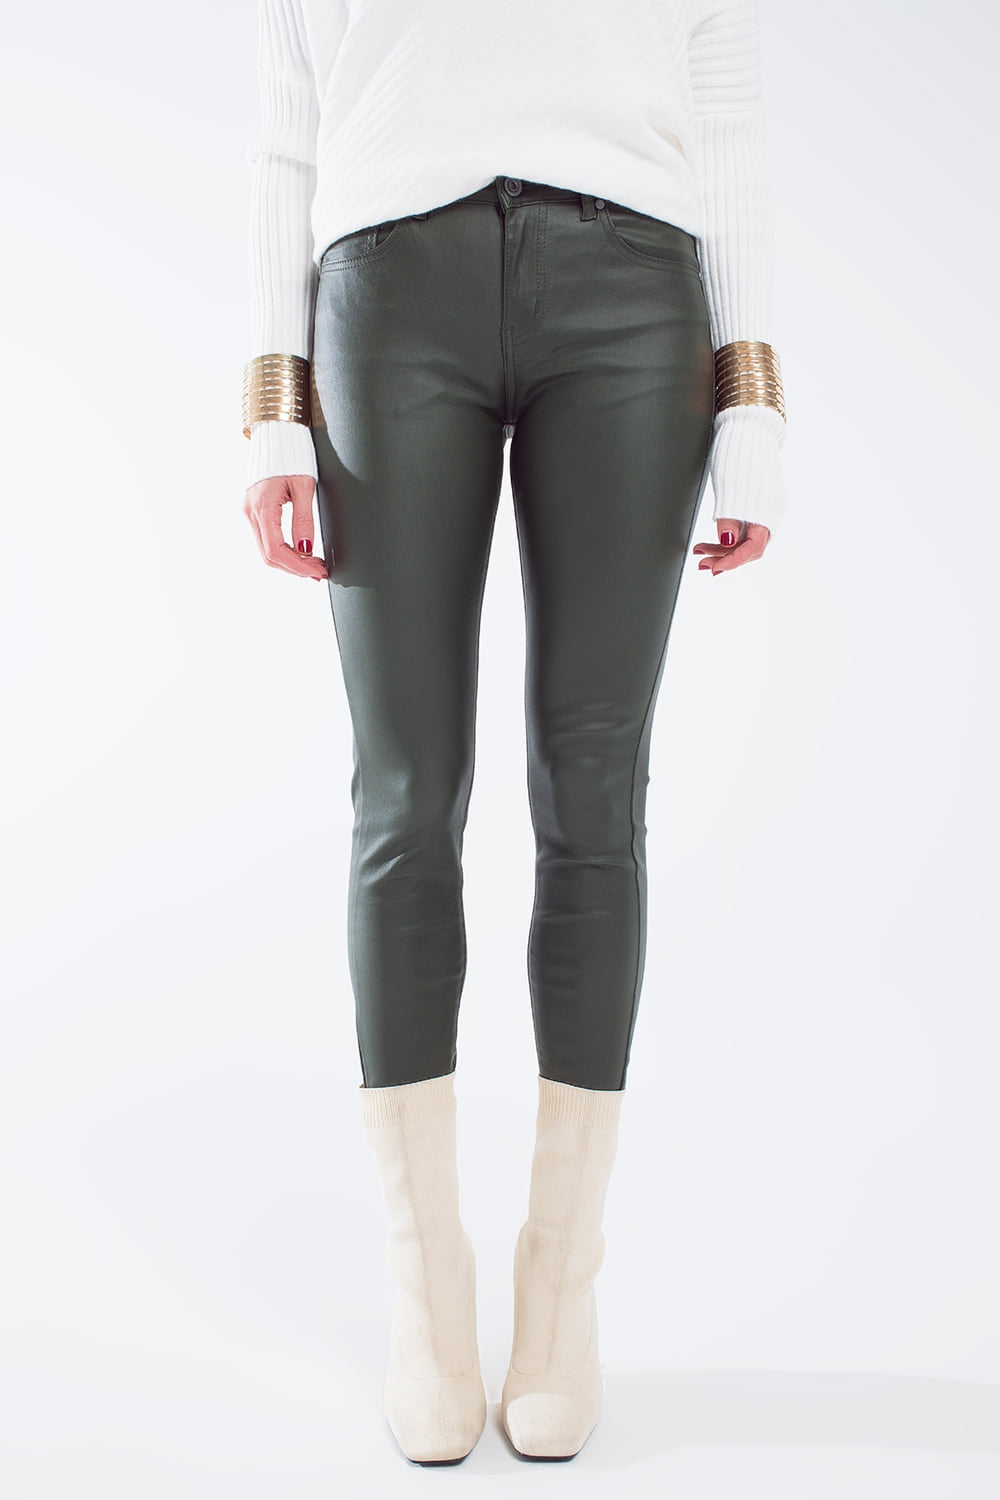 Q2 leatherette effect super skinny pants in olive green